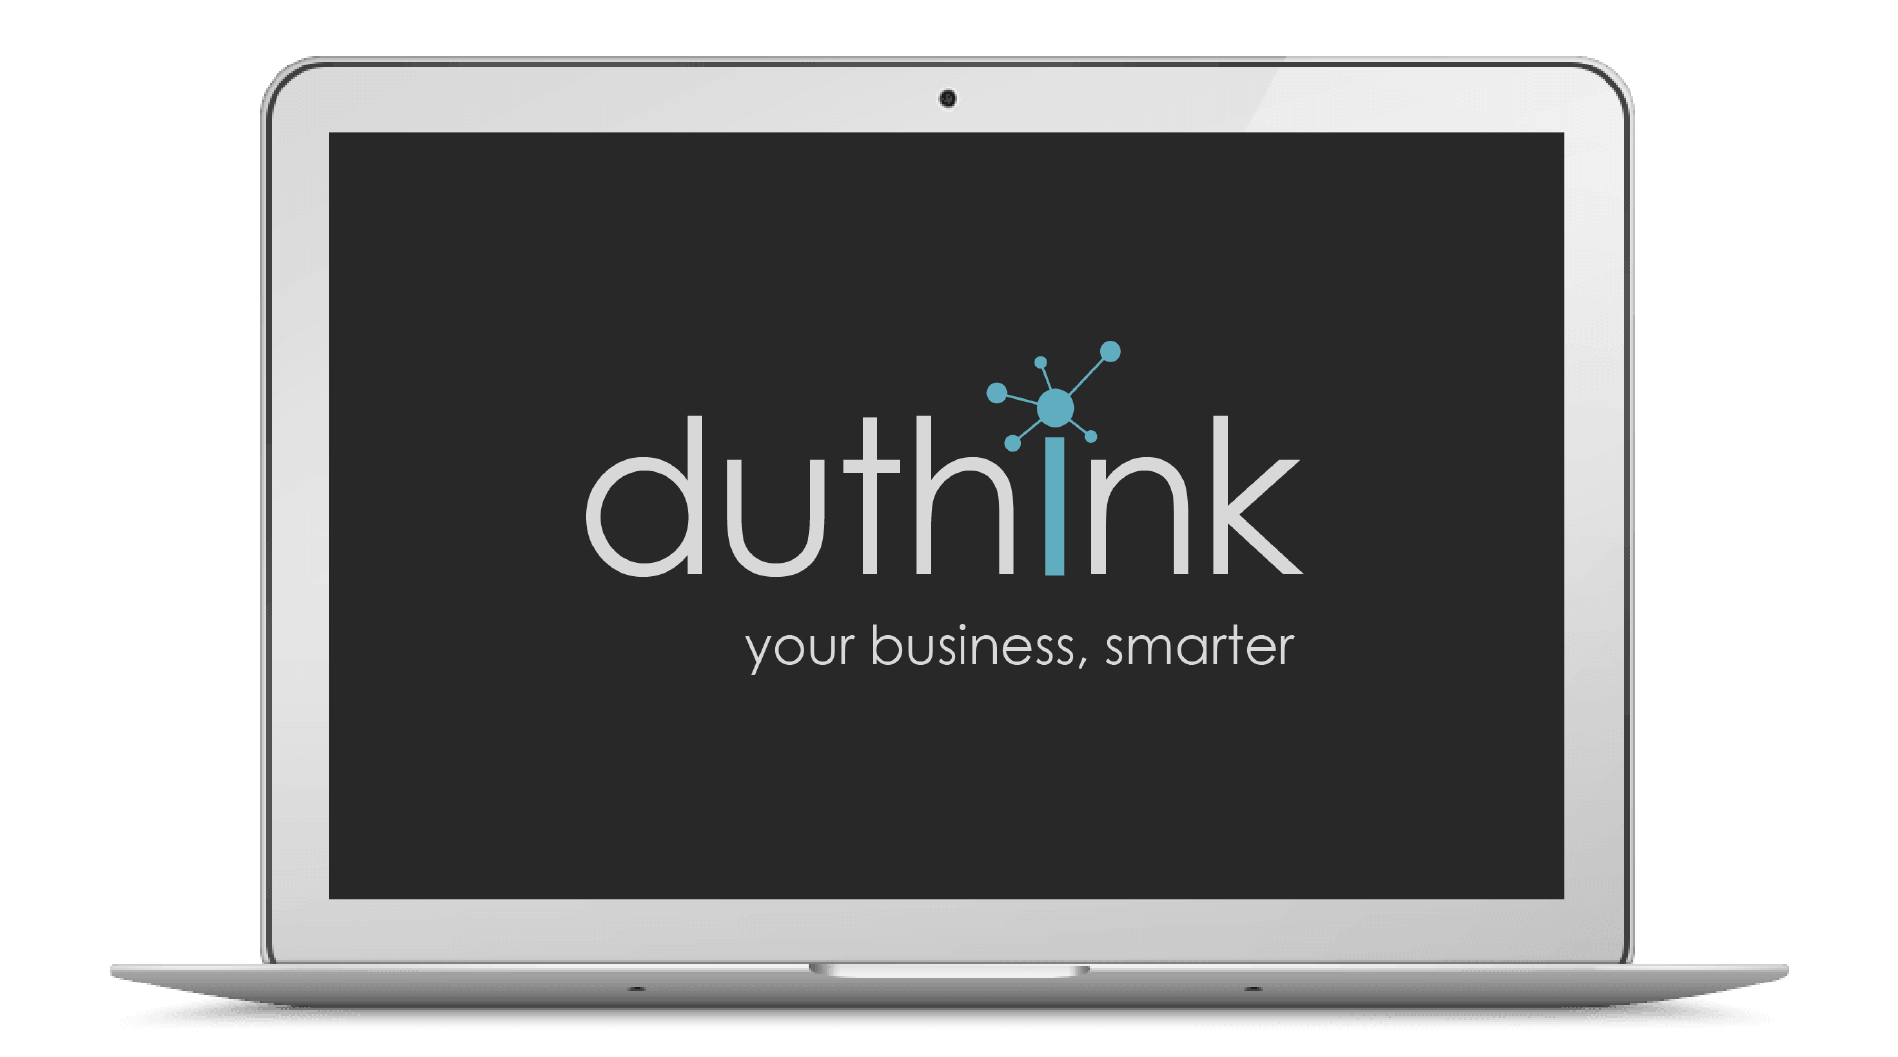 duthink your business smarter